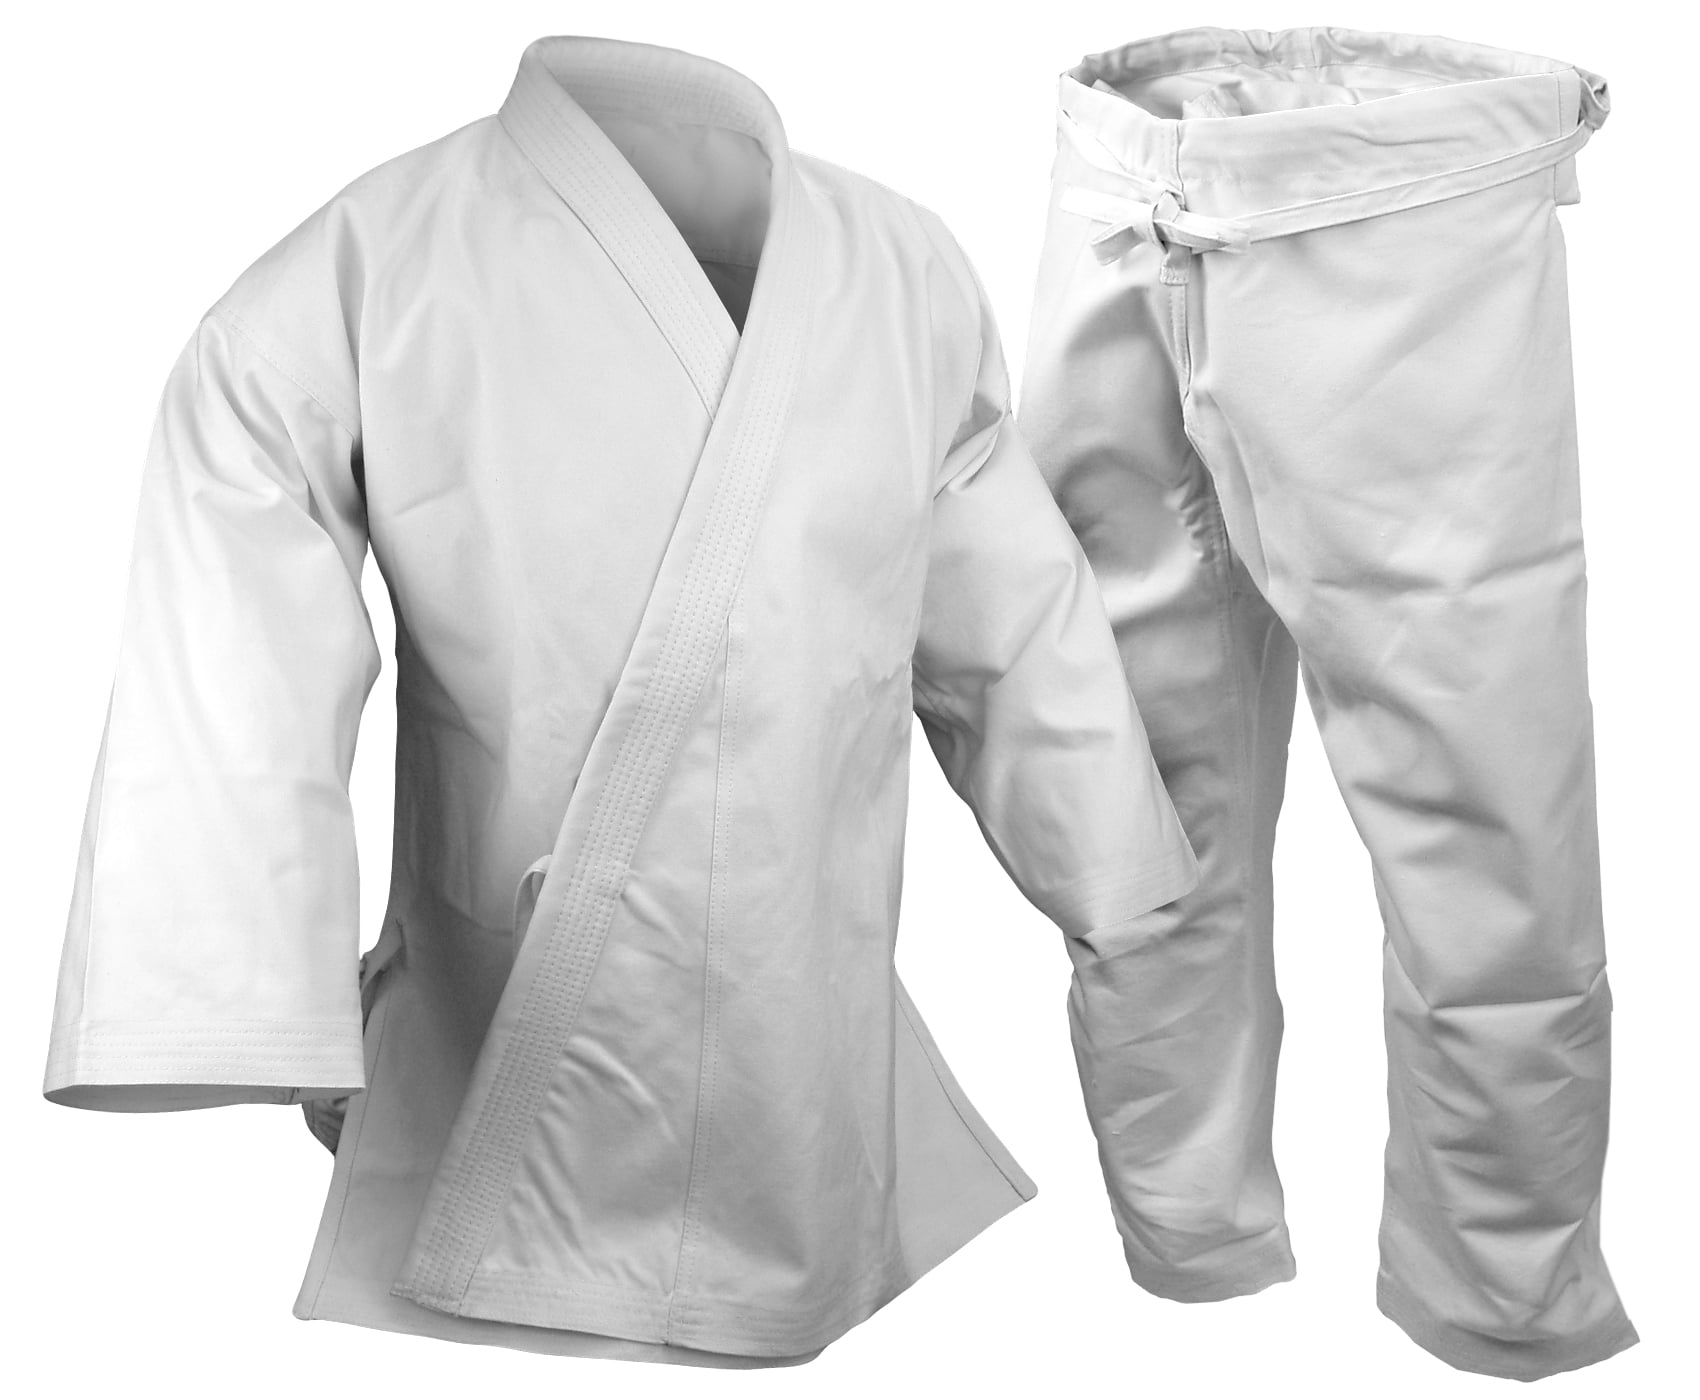 Cimac Tournament Heavyweight Karate Suit 14oz Gi Adult Mens Ladies White Uniform 